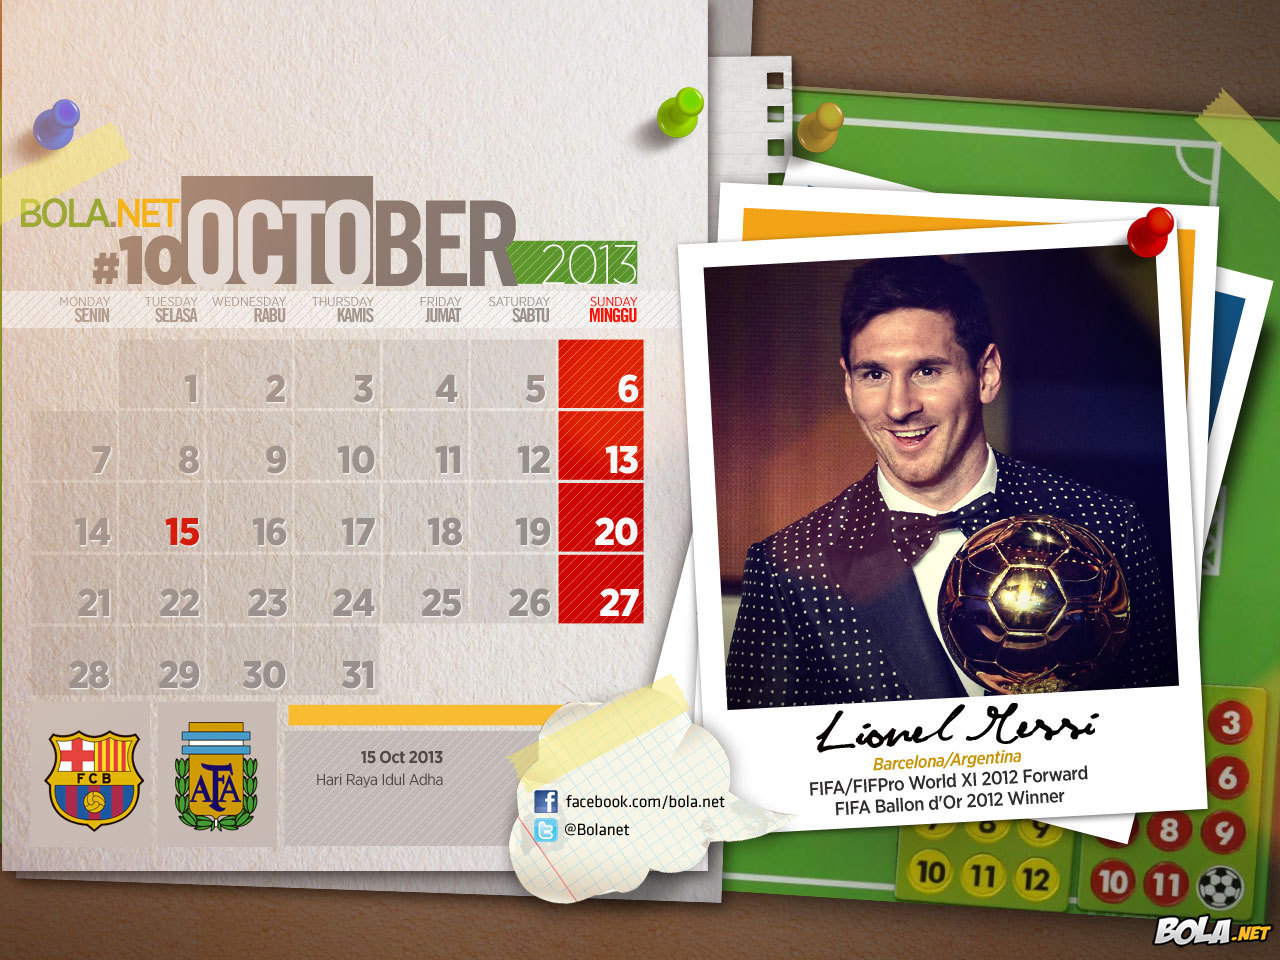 Download Wallpaper - Messi Kalender Oktober 2013 - Bola.net